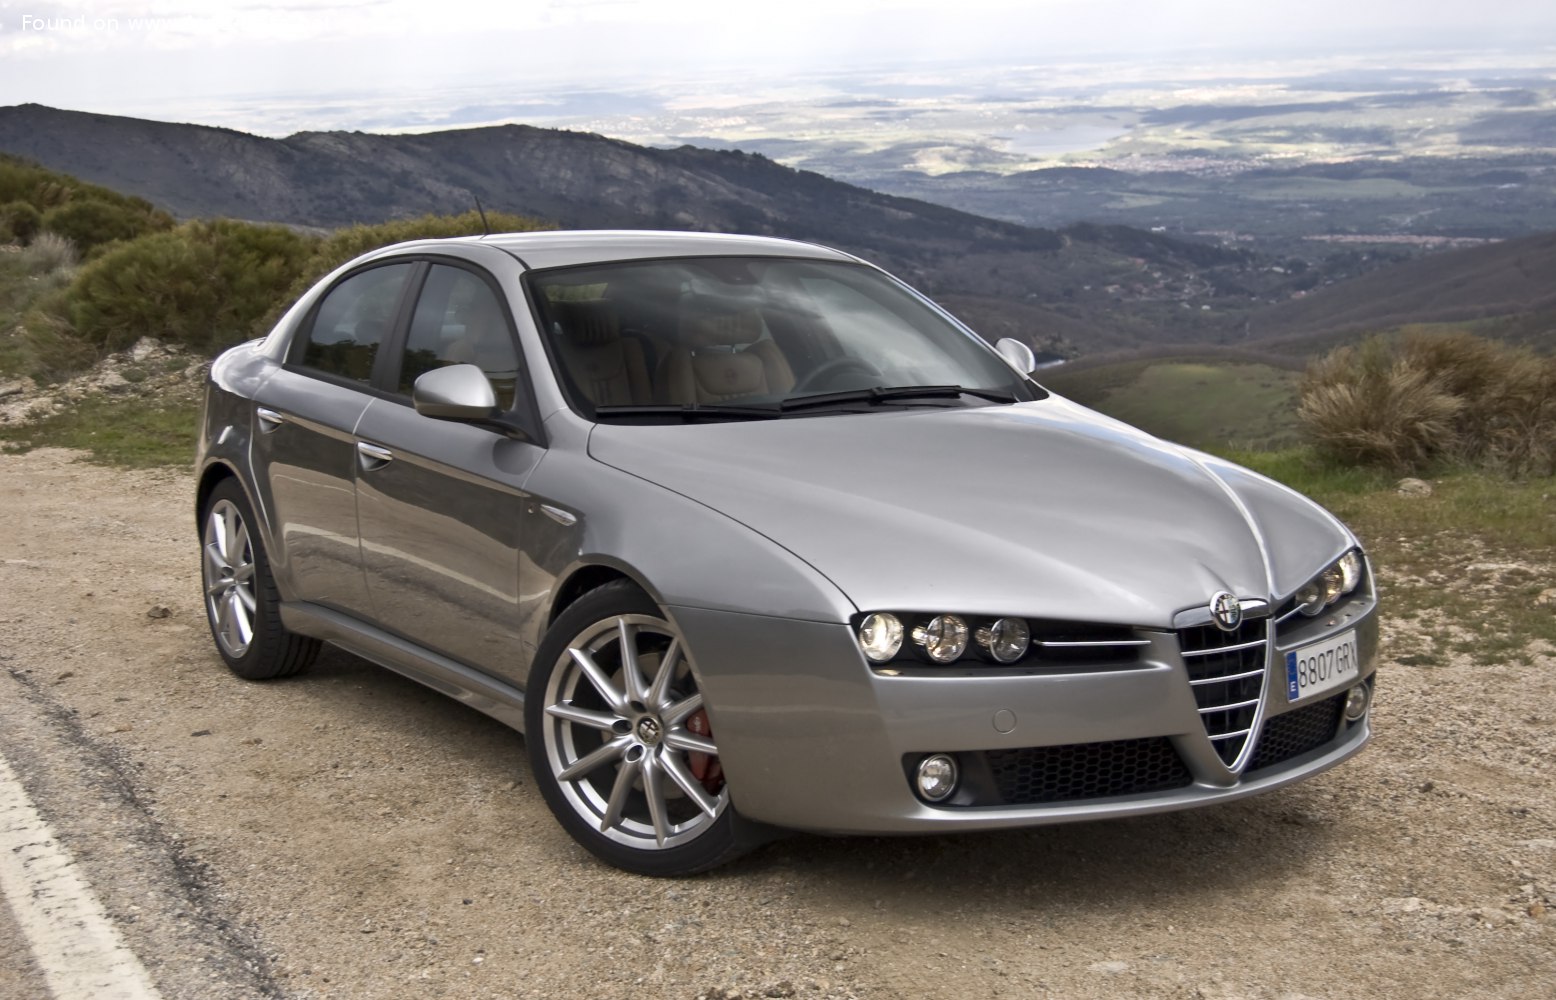 Alfa Romeo 159 - información, precios, alternativas - AutoScout24